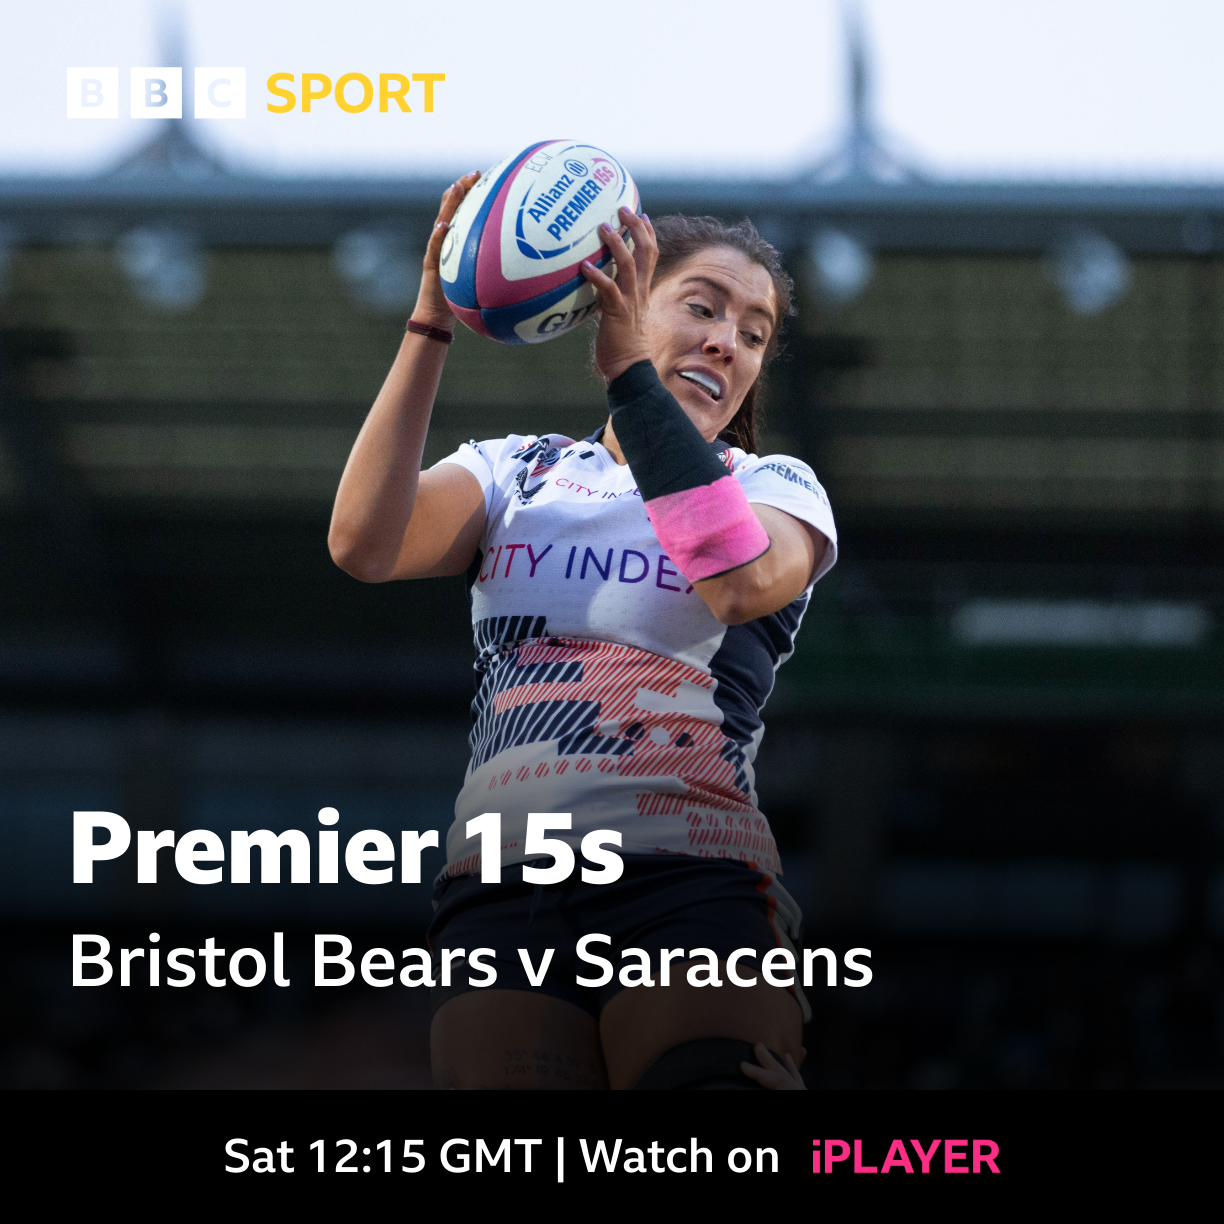 Premier 15s Bristol Bears v Saracens - Live